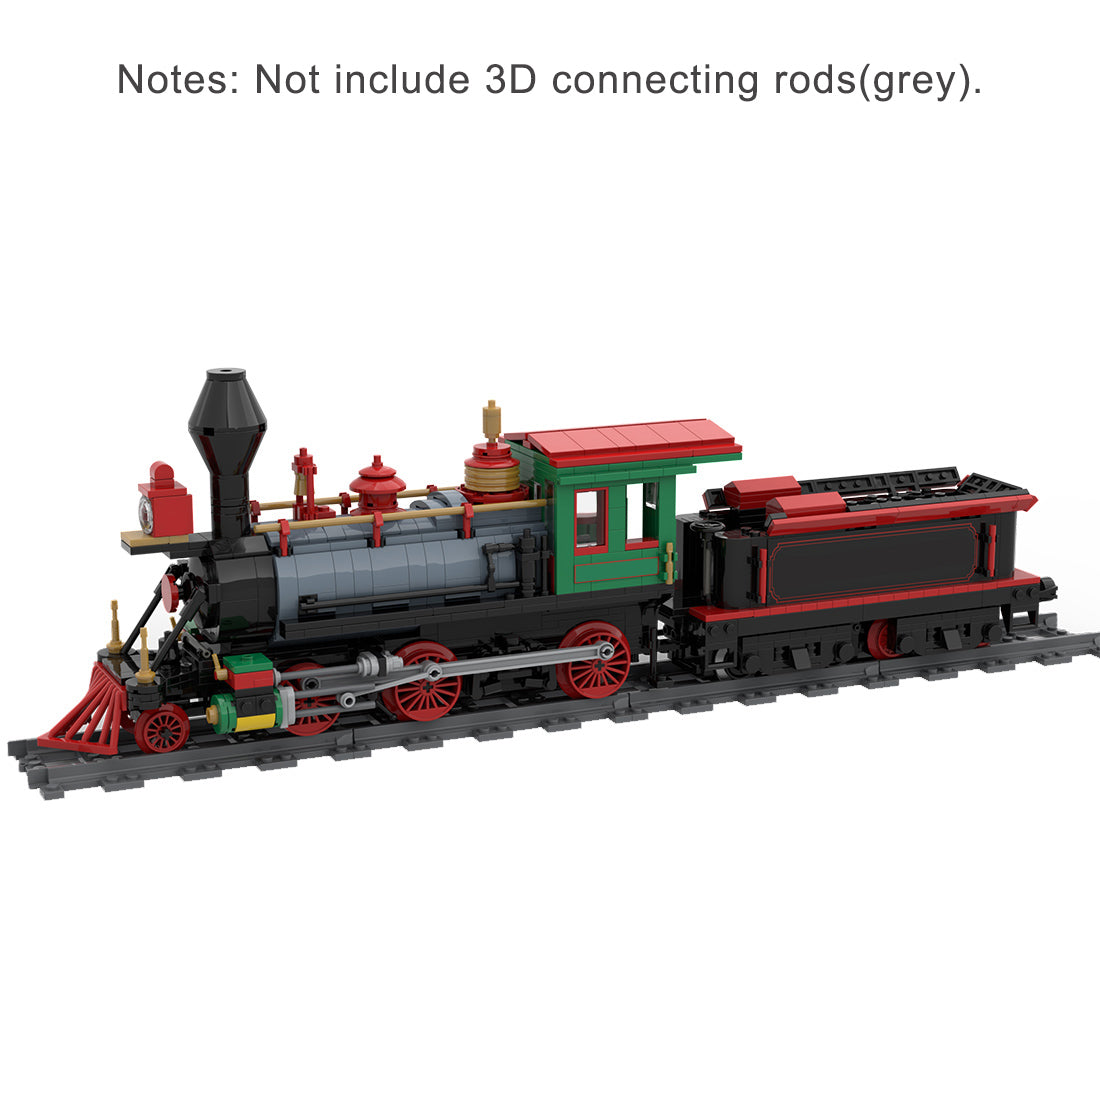 MOC-48524 Winter Christmas Train Model Building Block Set enginediyshop